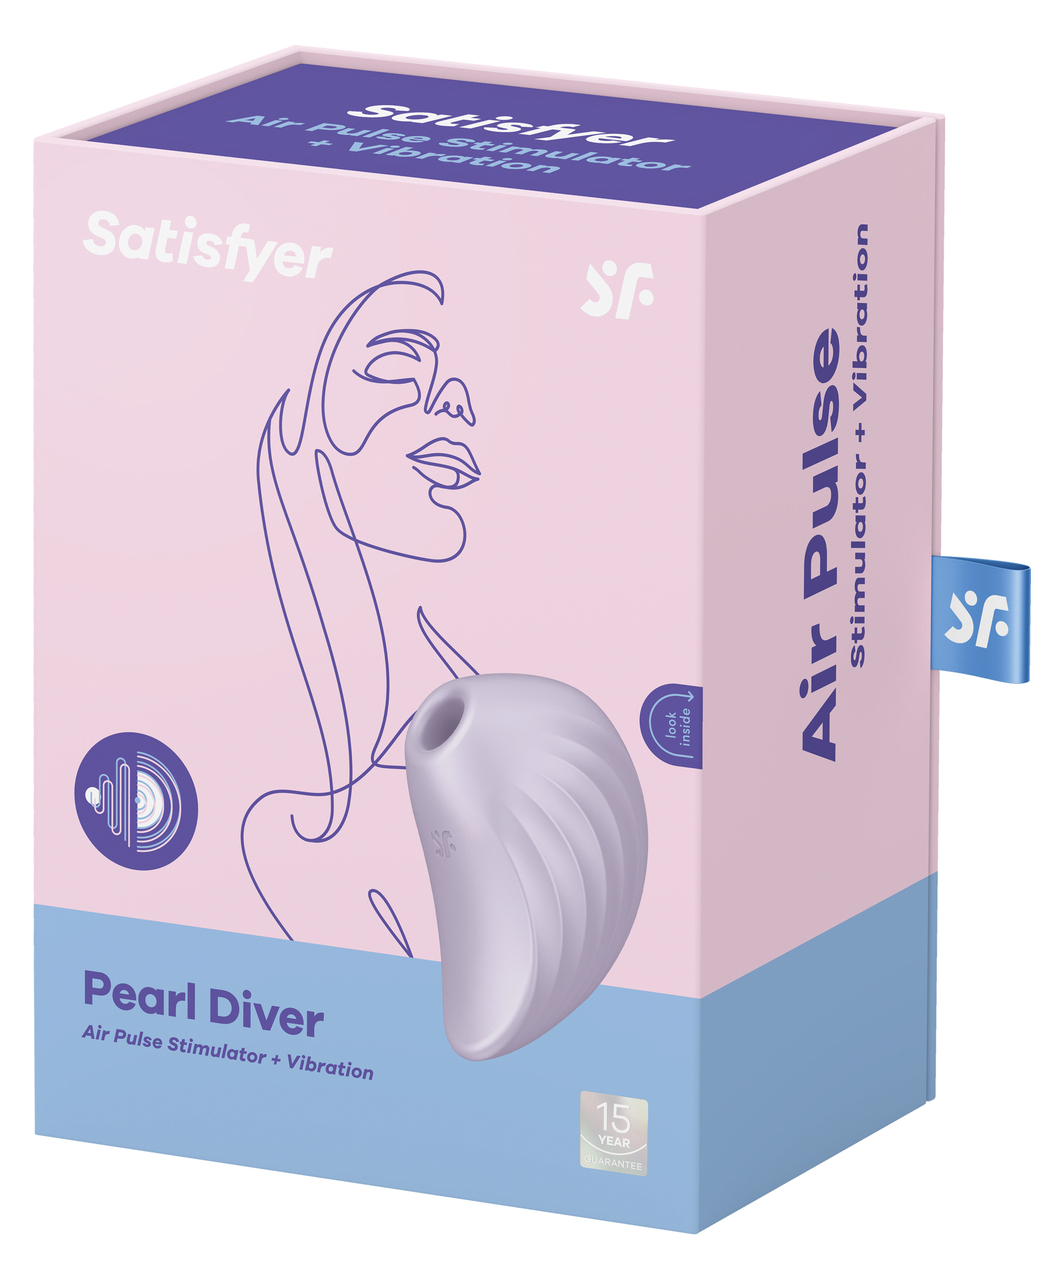 Satisfyer Pearl Diver clitoral stimulator